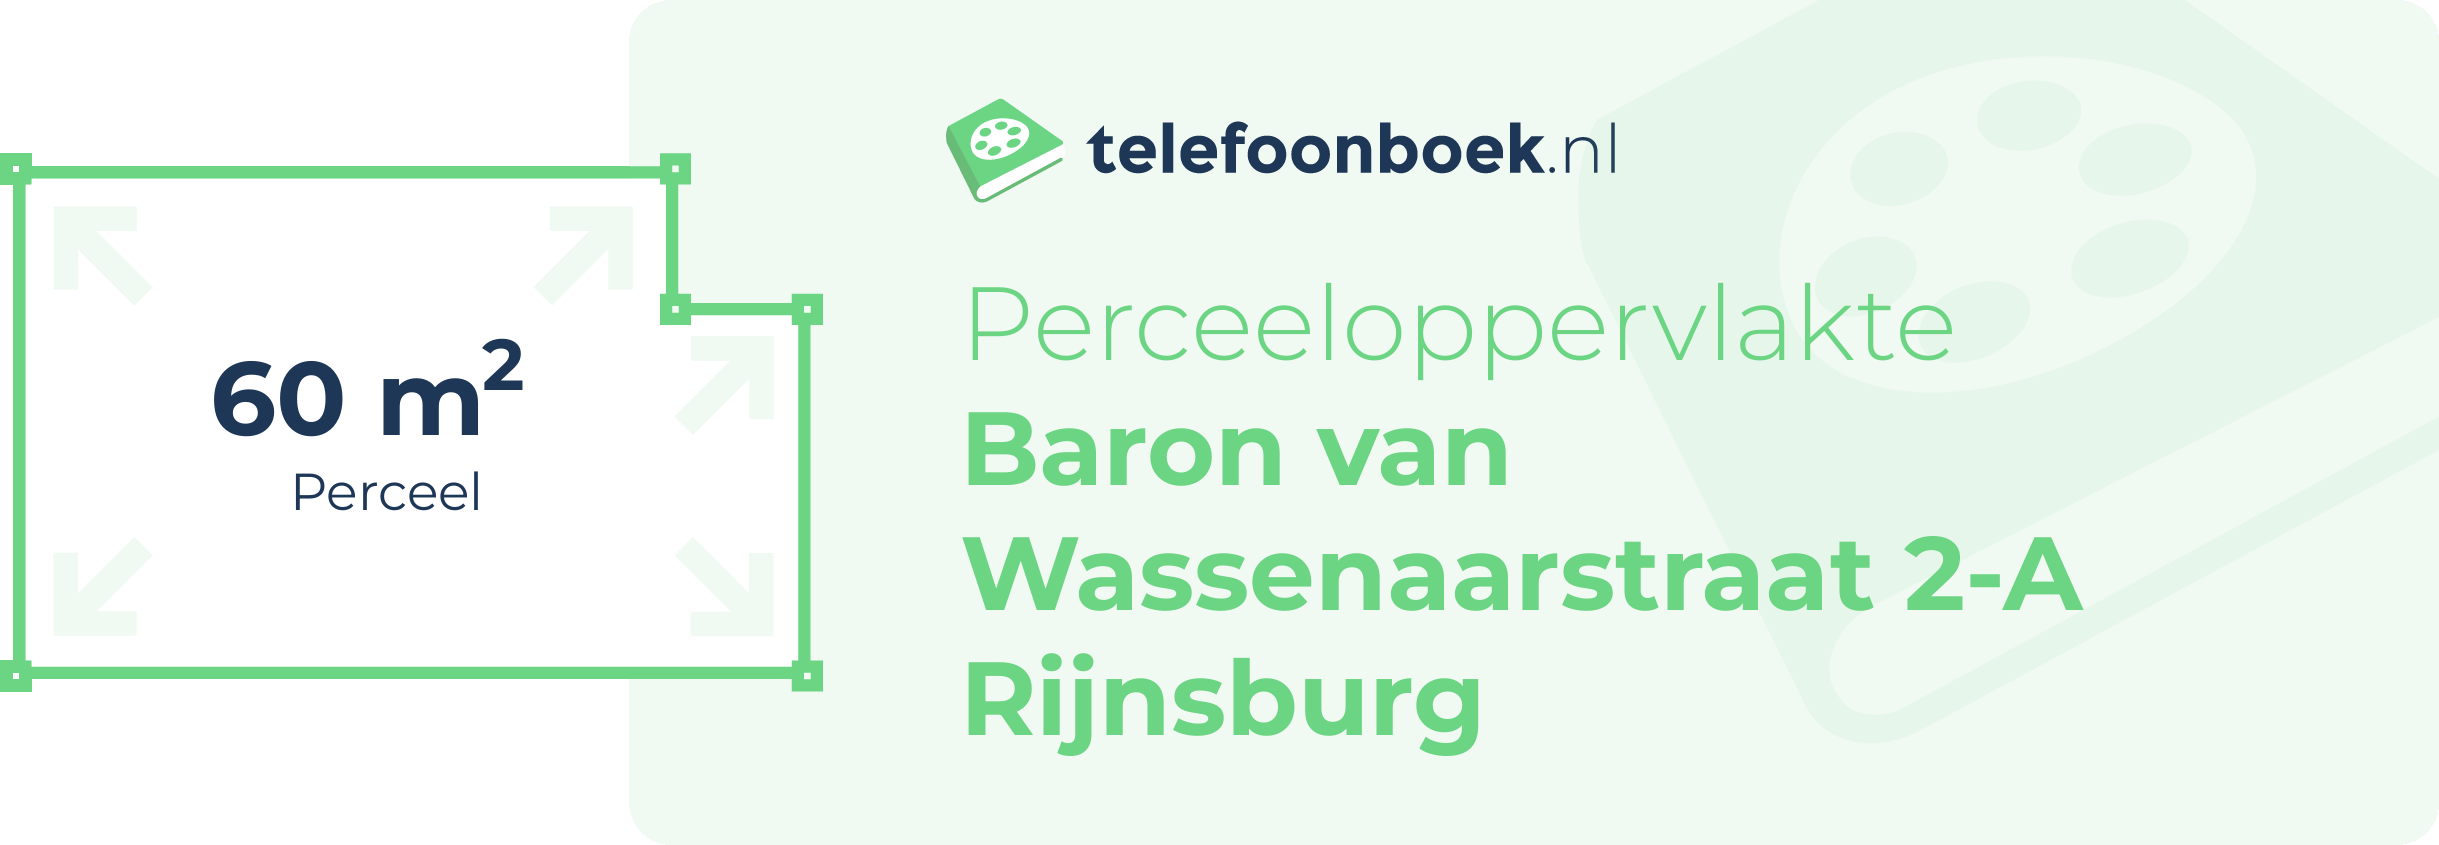 Perceeloppervlakte Baron Van Wassenaarstraat 2-A Rijnsburg